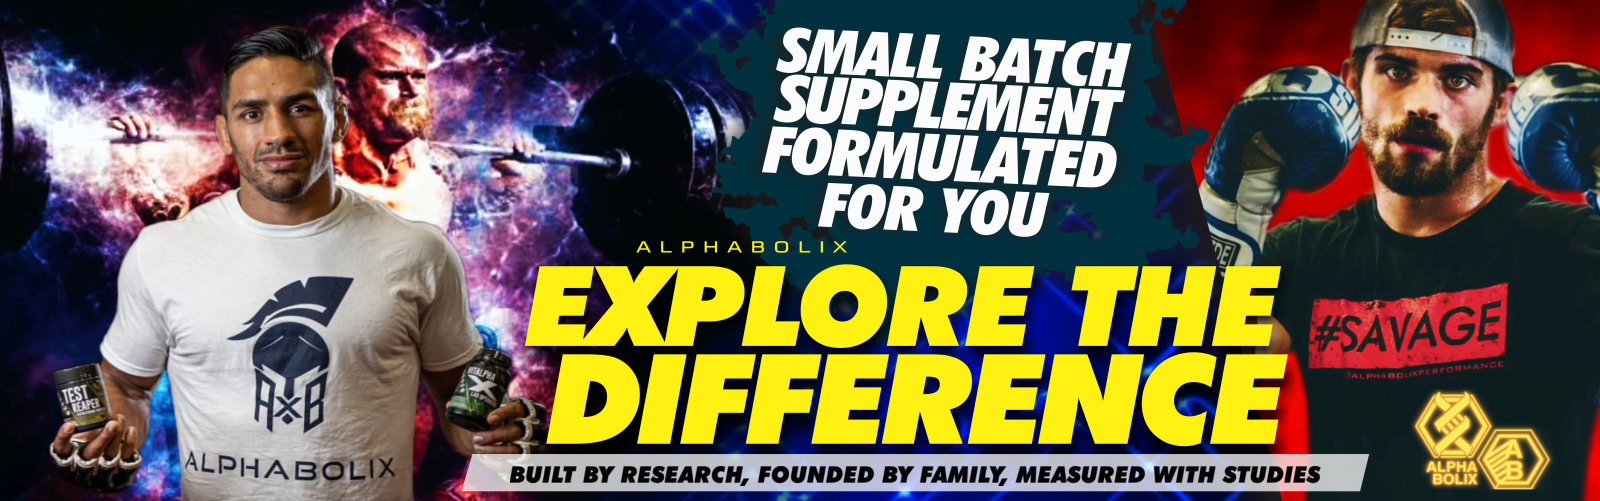 Alphabolix whole food vitamin banner